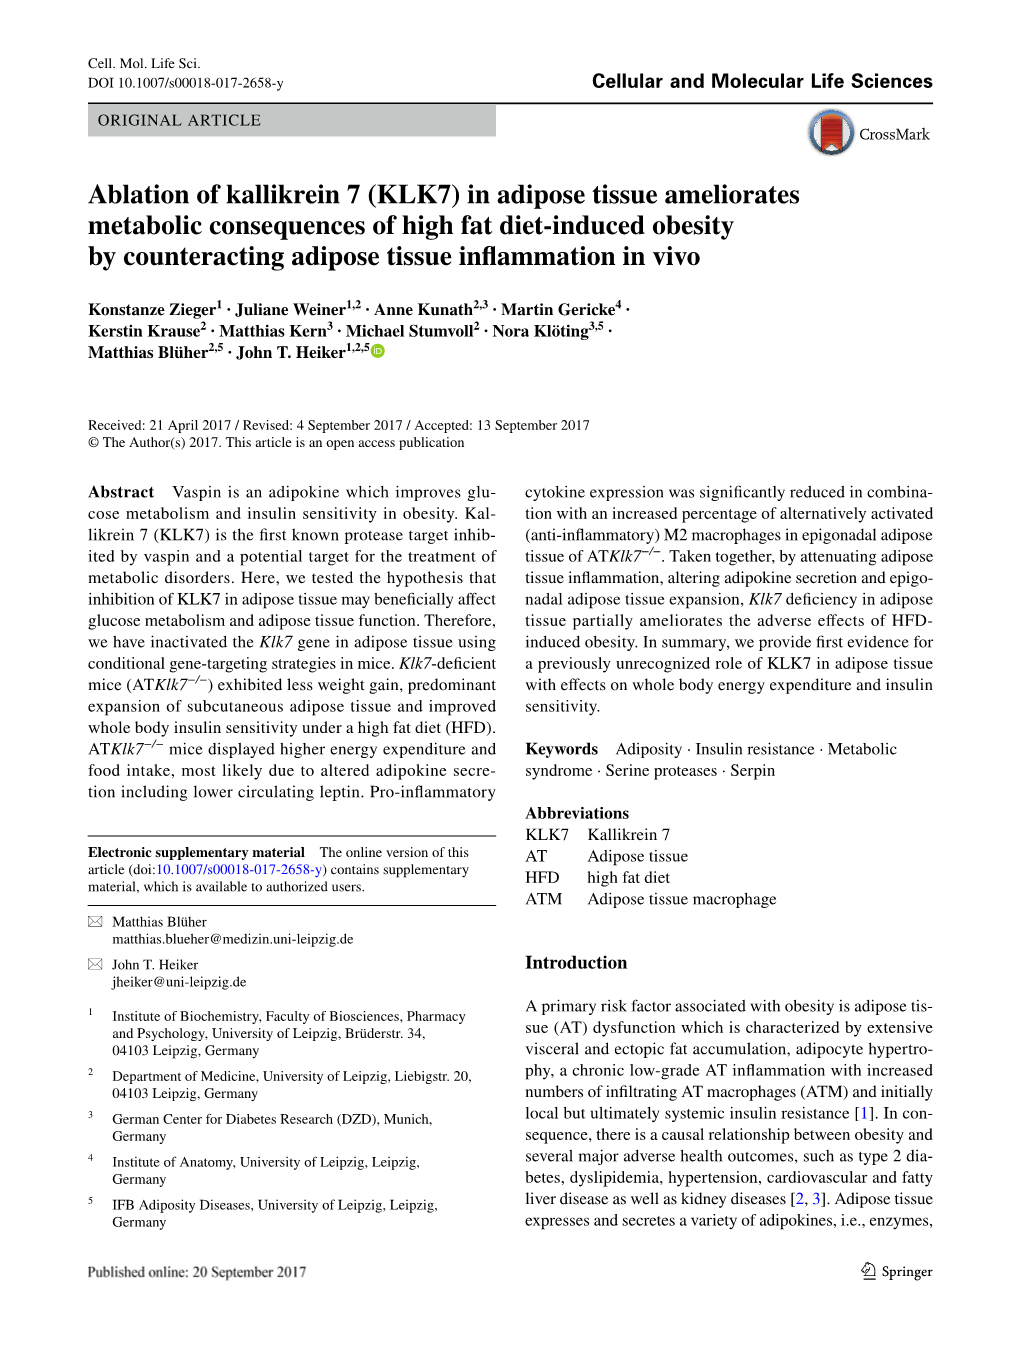 Ablation of Kallikrein 7 (KLK7) in Adipose Tissue Ameliorates